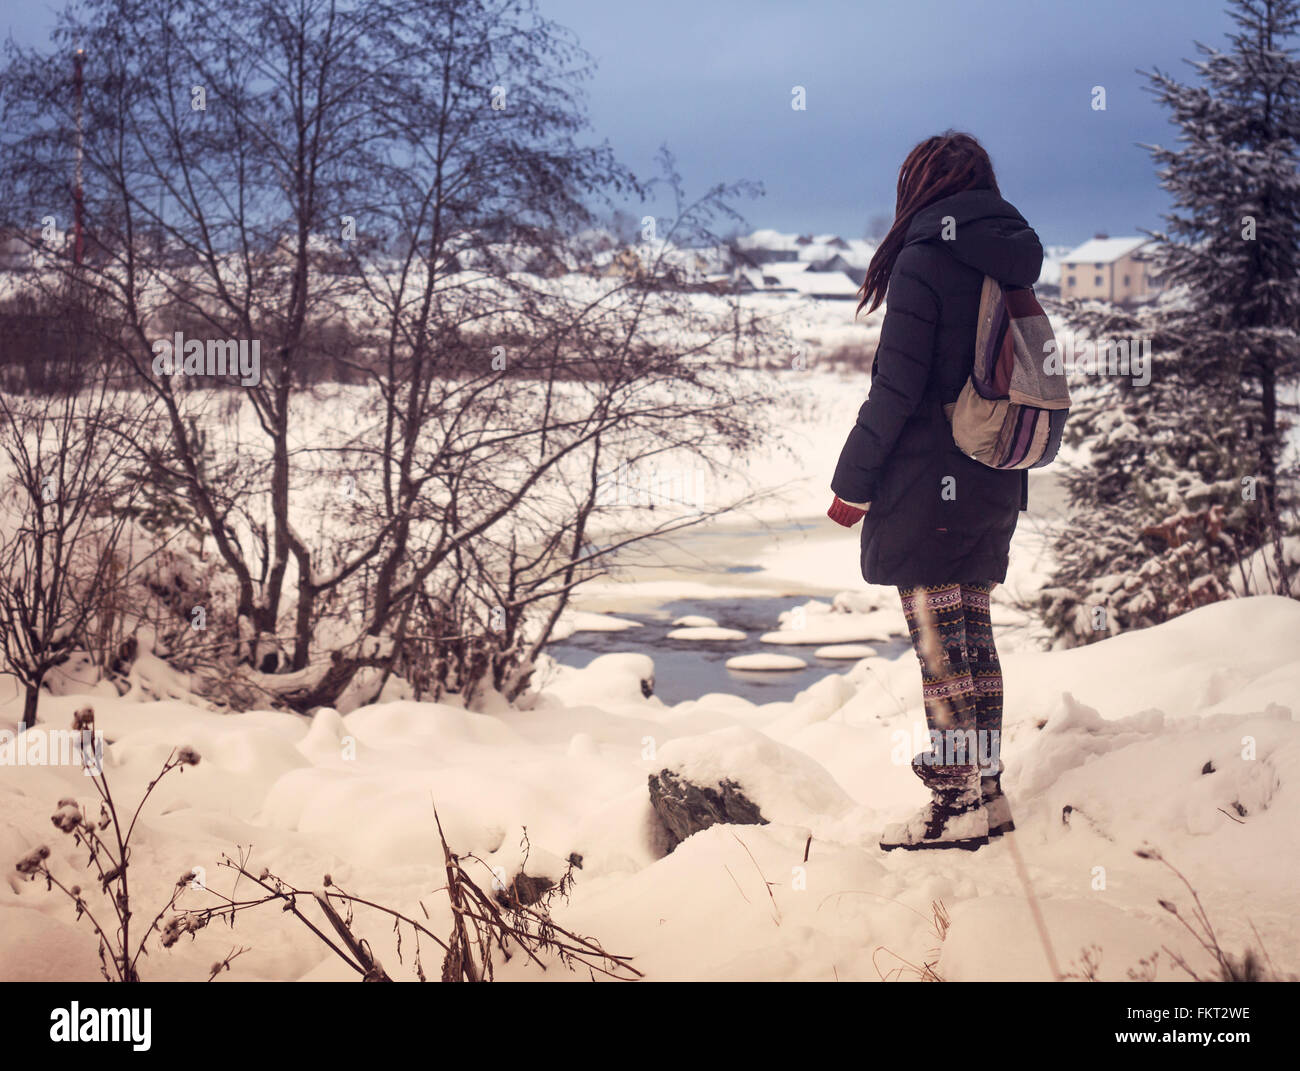 Caucasian woman admiring snowy rural scene Stock Photo